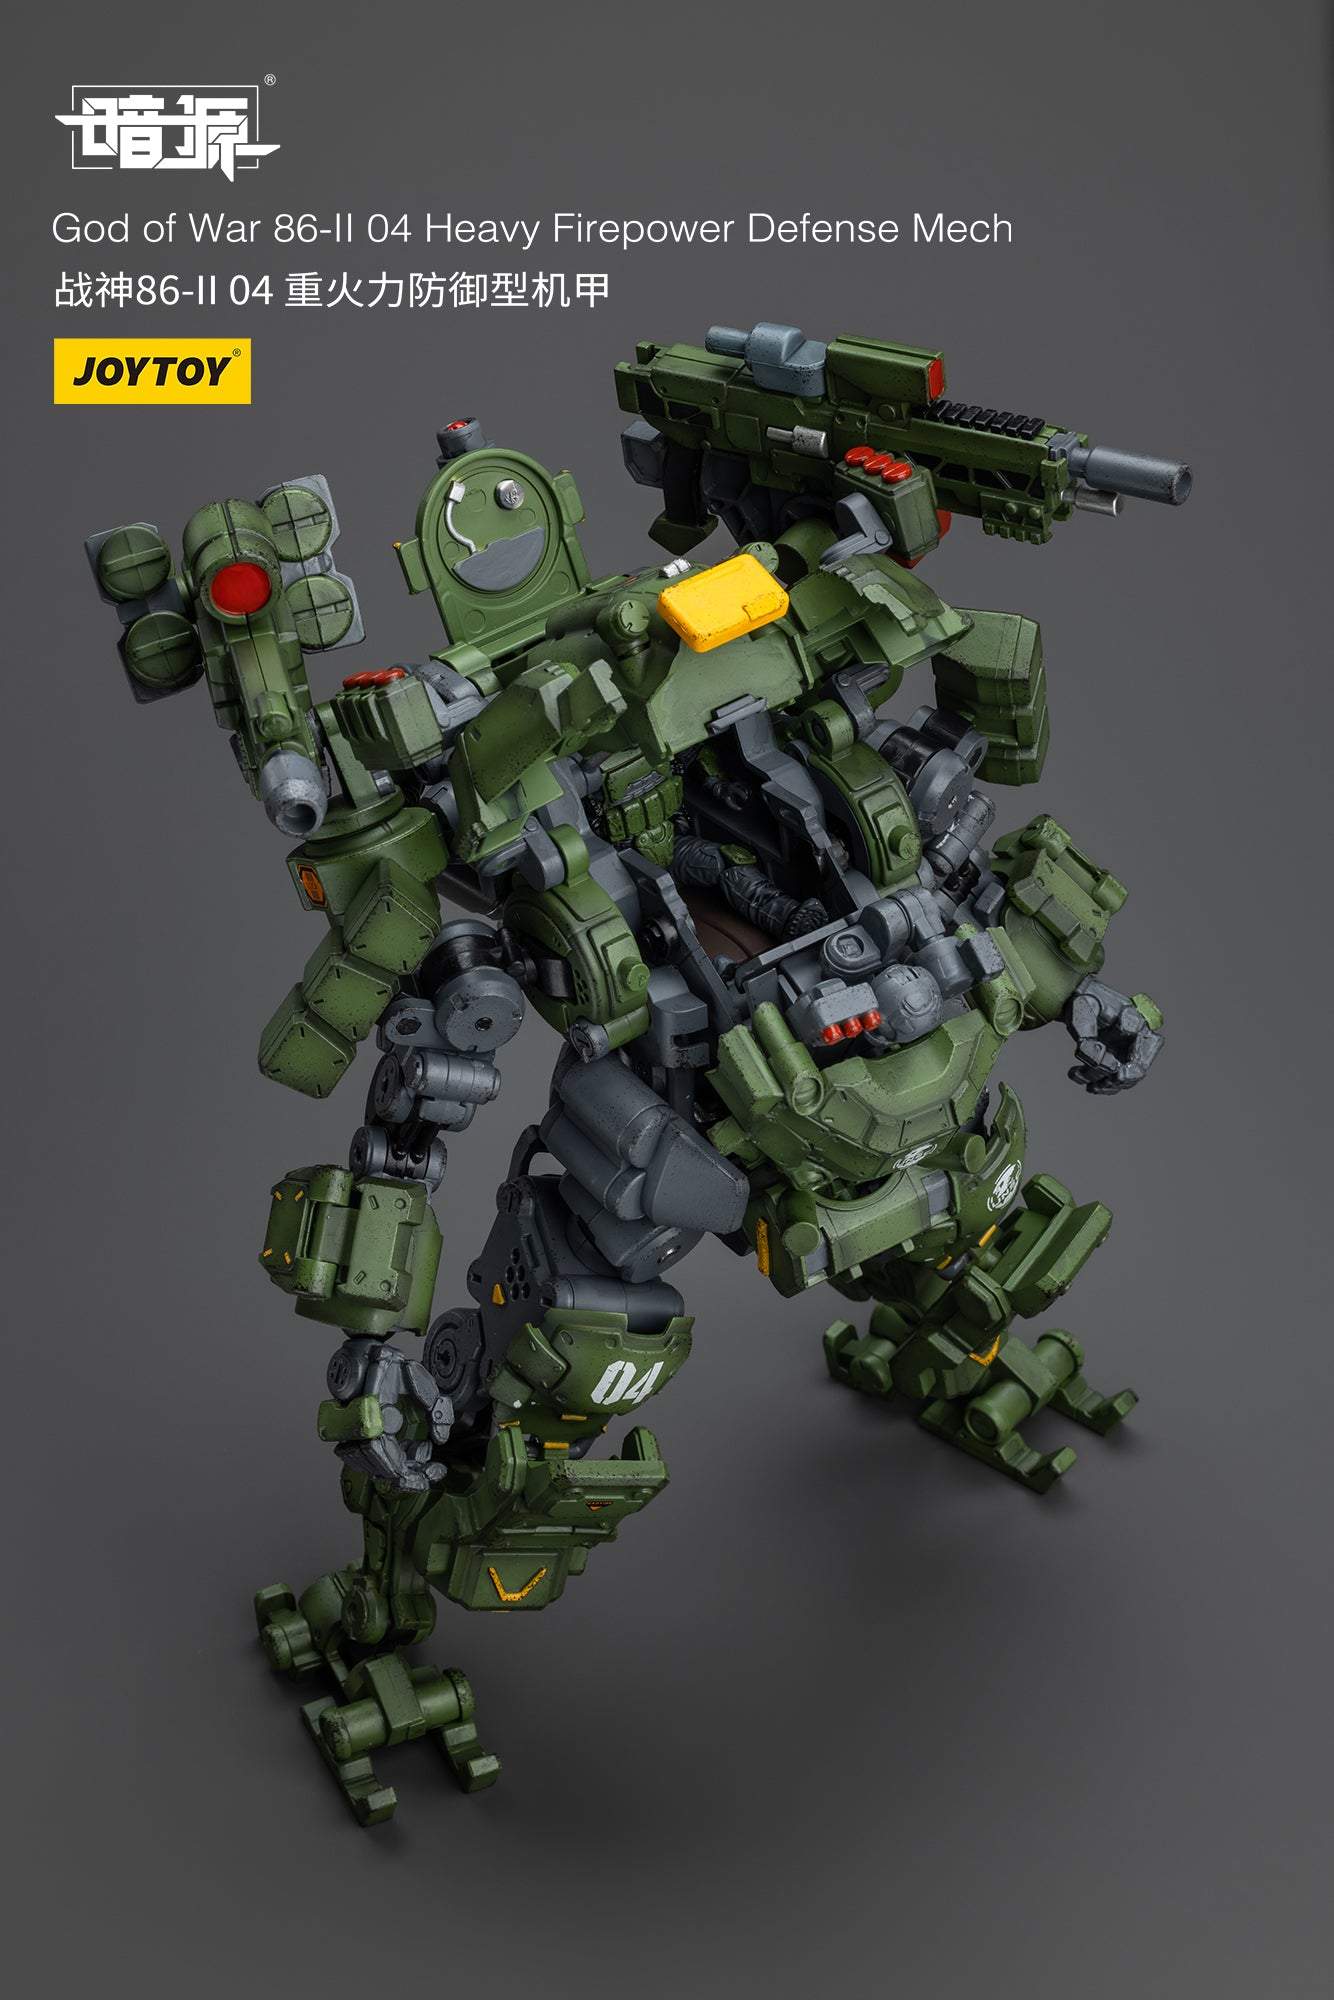 God of War 86-II 04 Heavy Firepower Defense Mech - Action Figure By JOYTOY